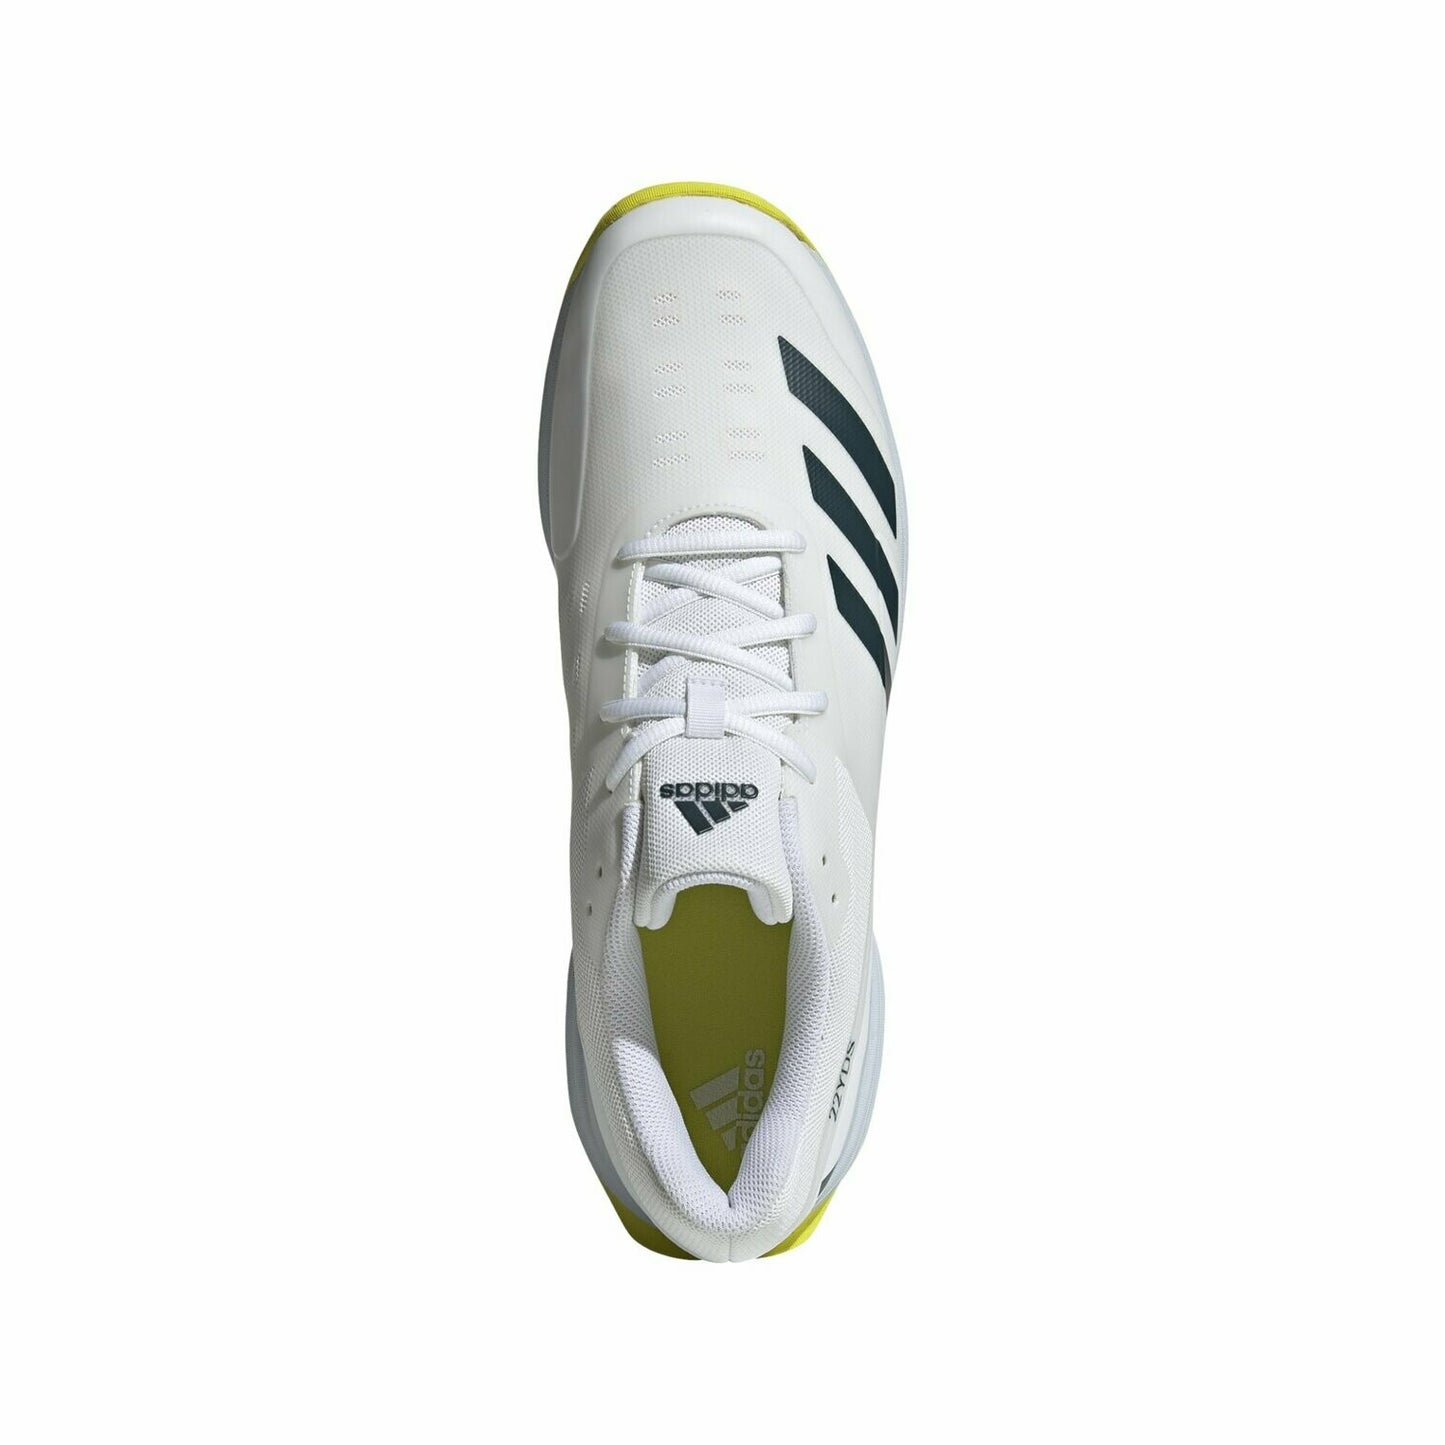 Adidas 22yds Cricket Spike White/Acid Yellow